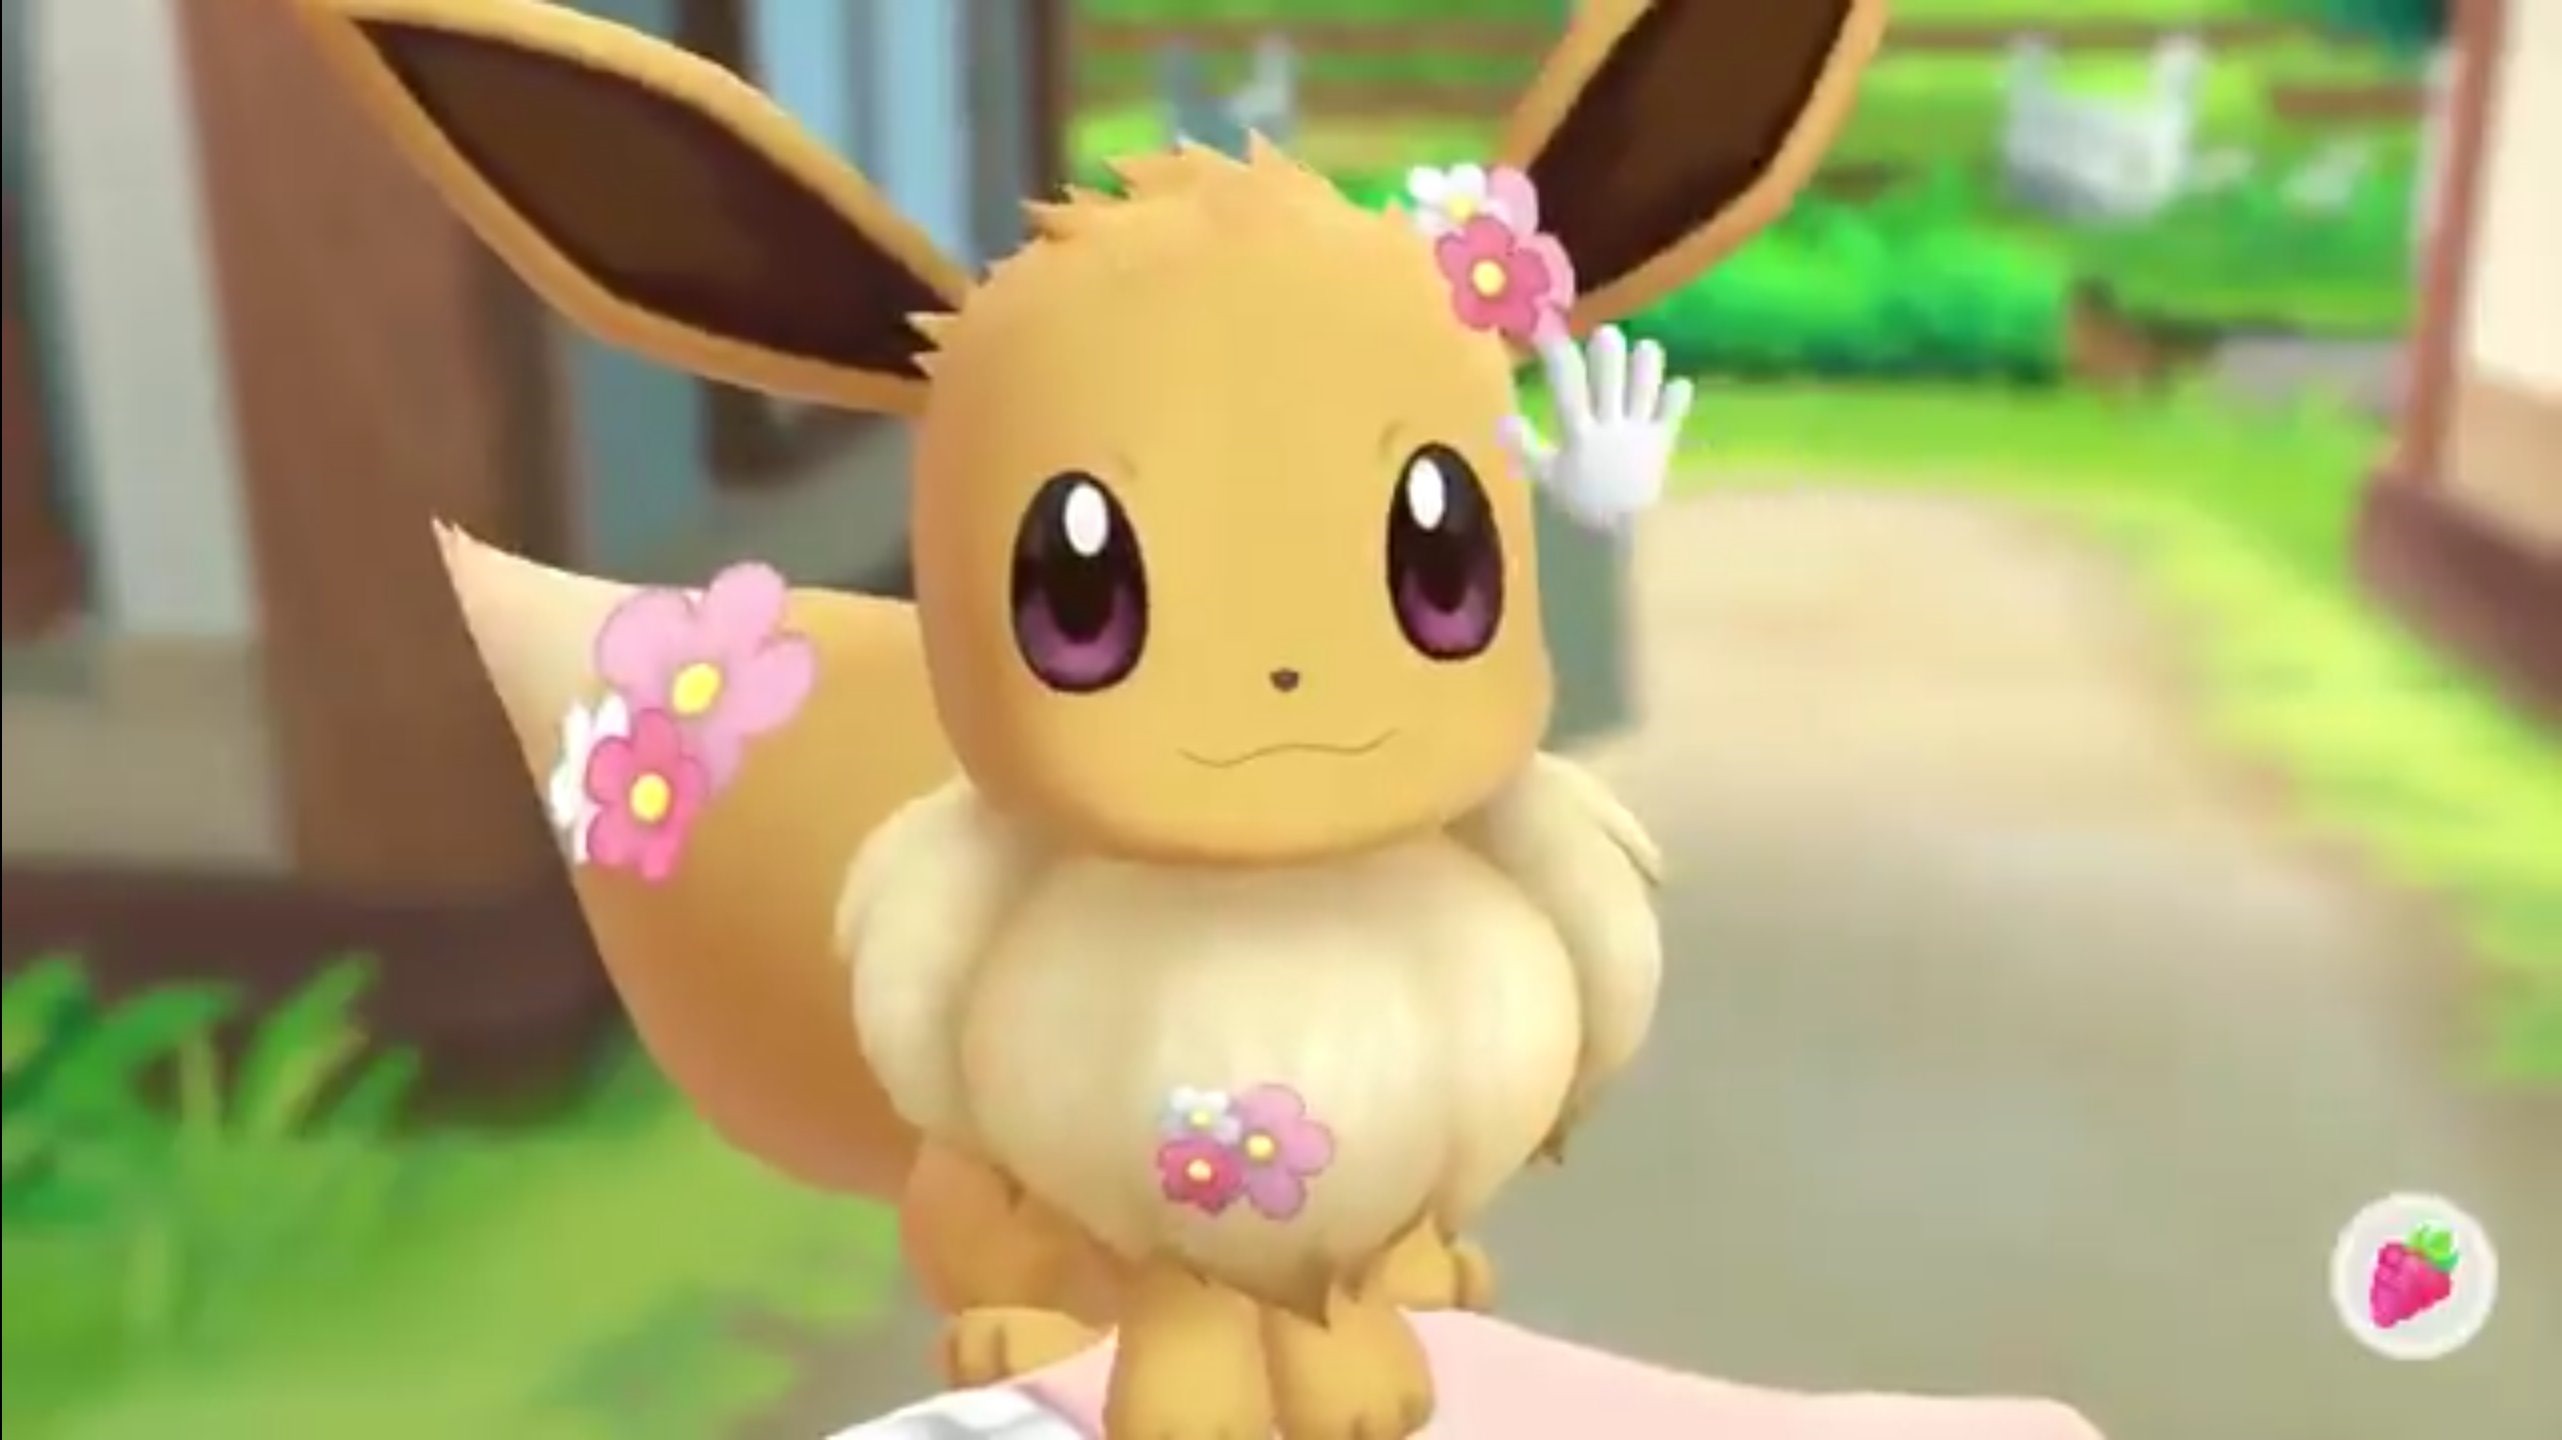 Alolan Form Pokémon Figures Are Headed To Japan This April - Siliconera